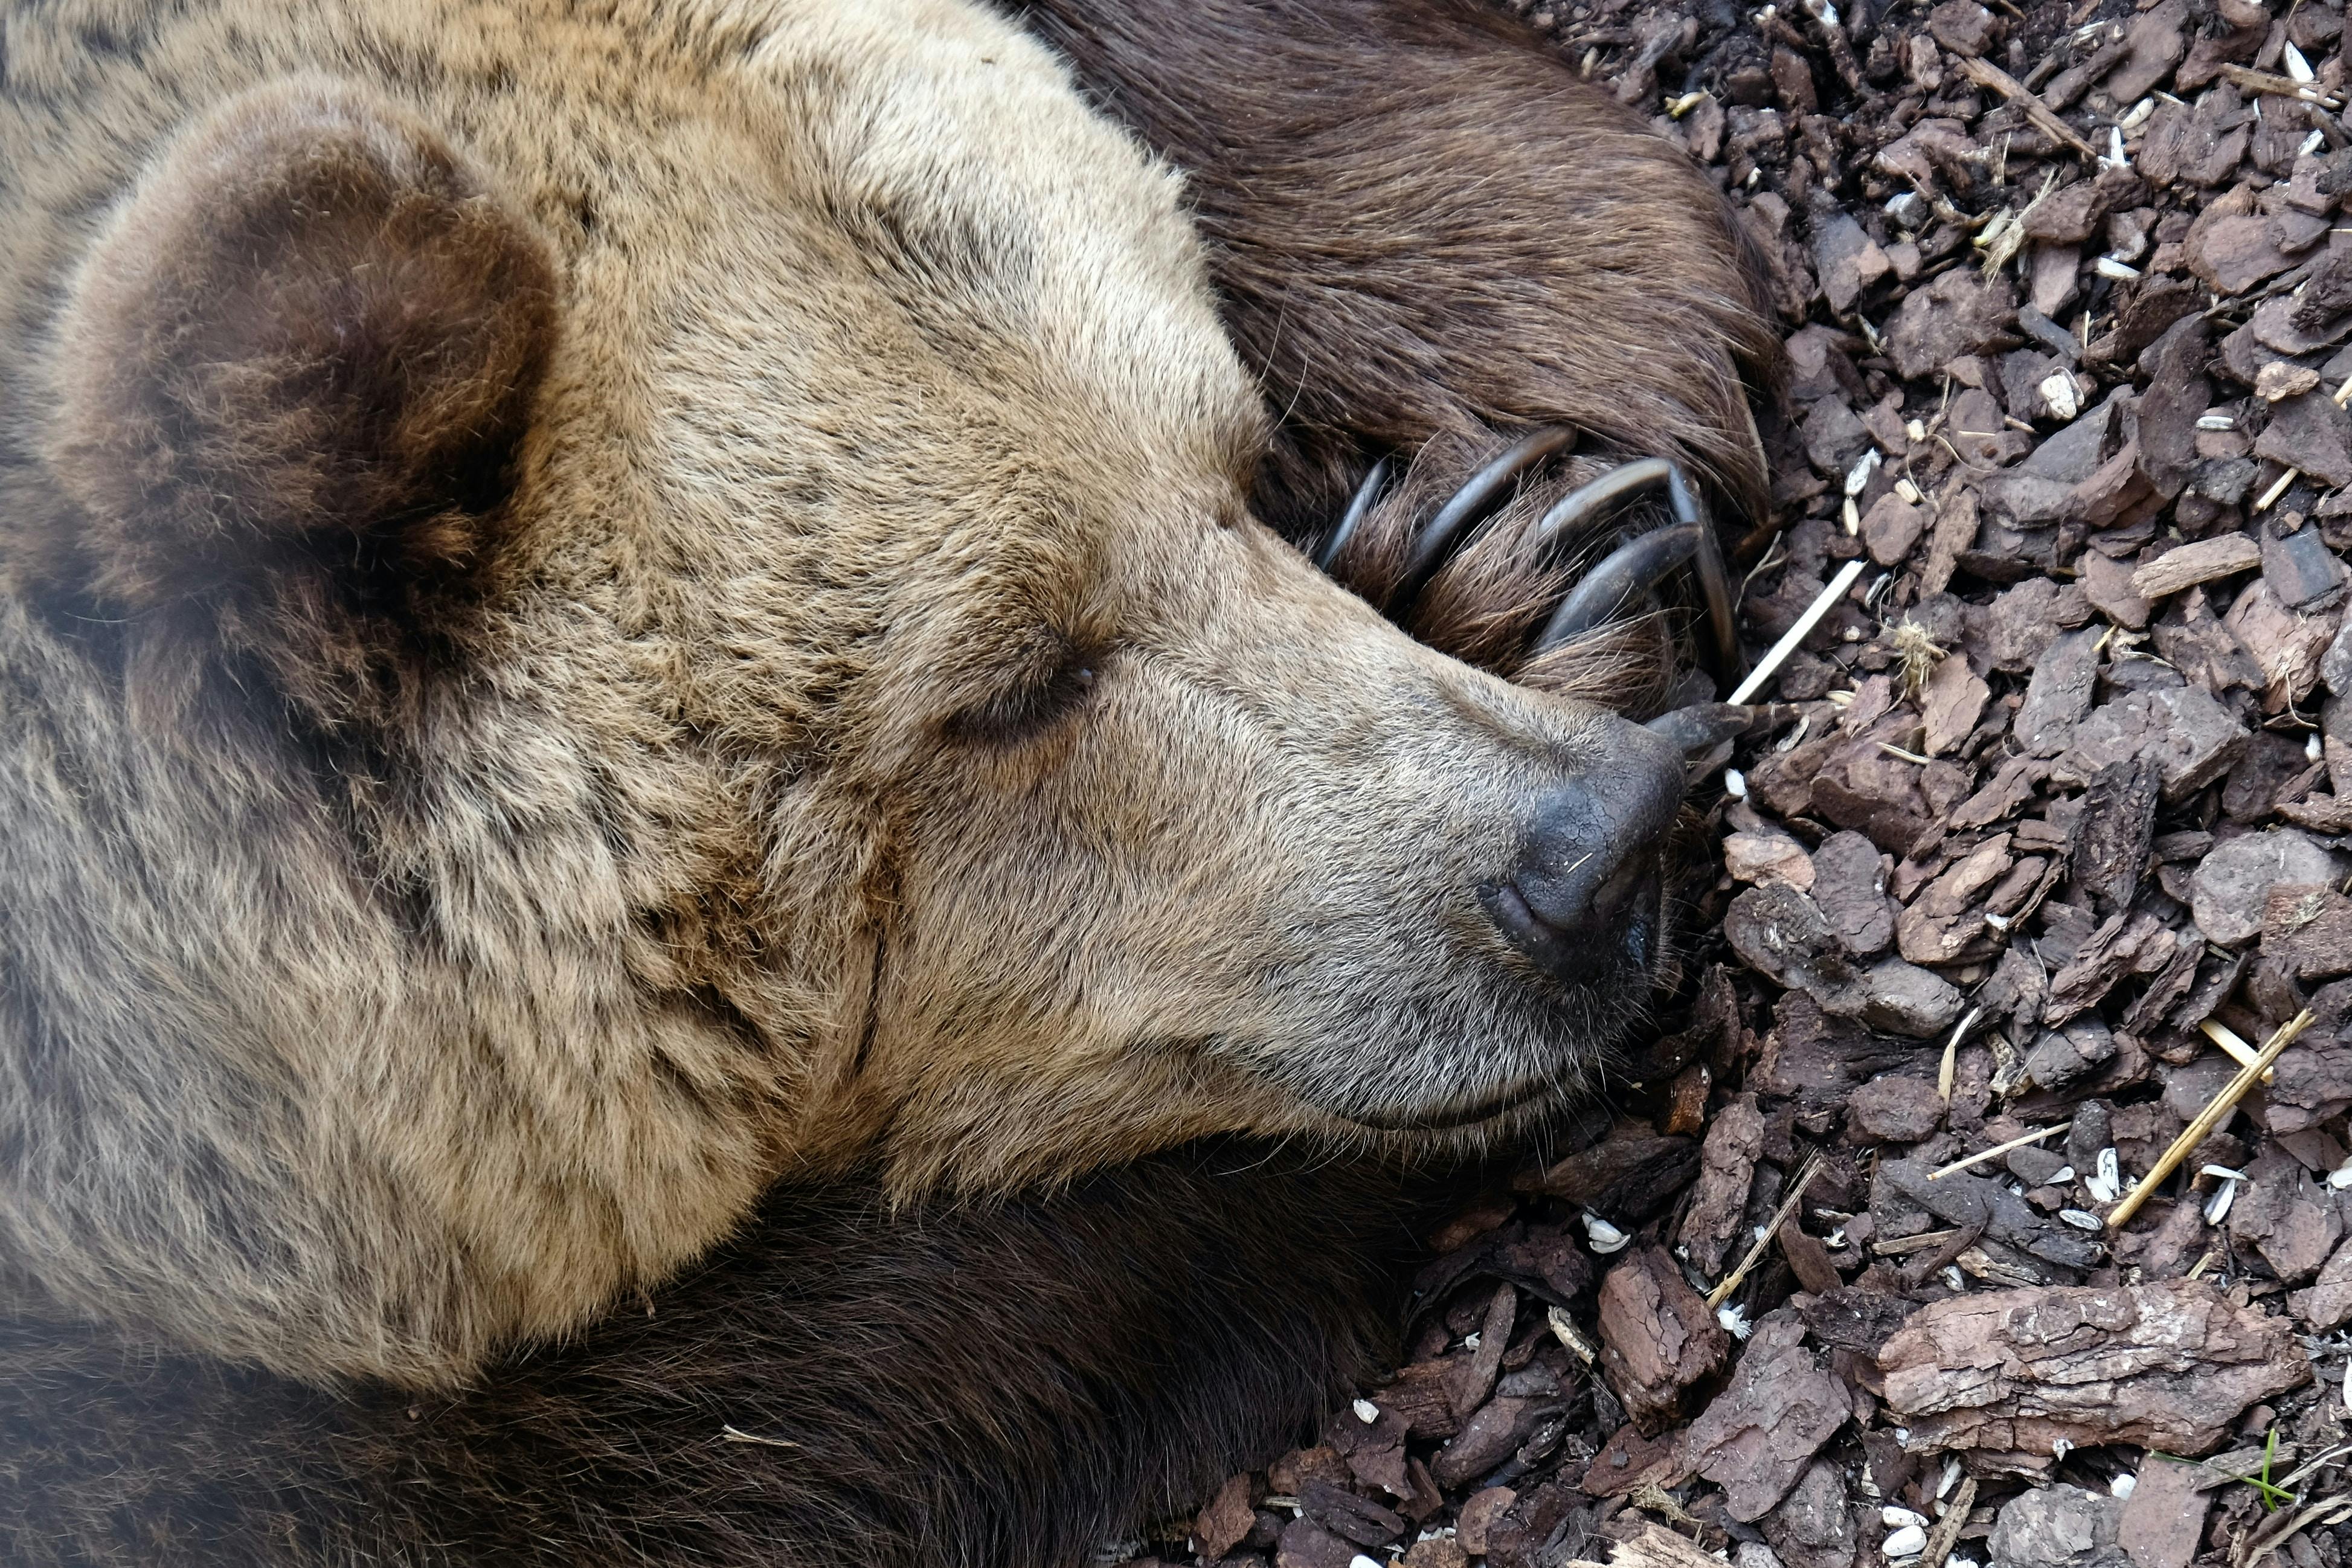 A sleeping bear. 